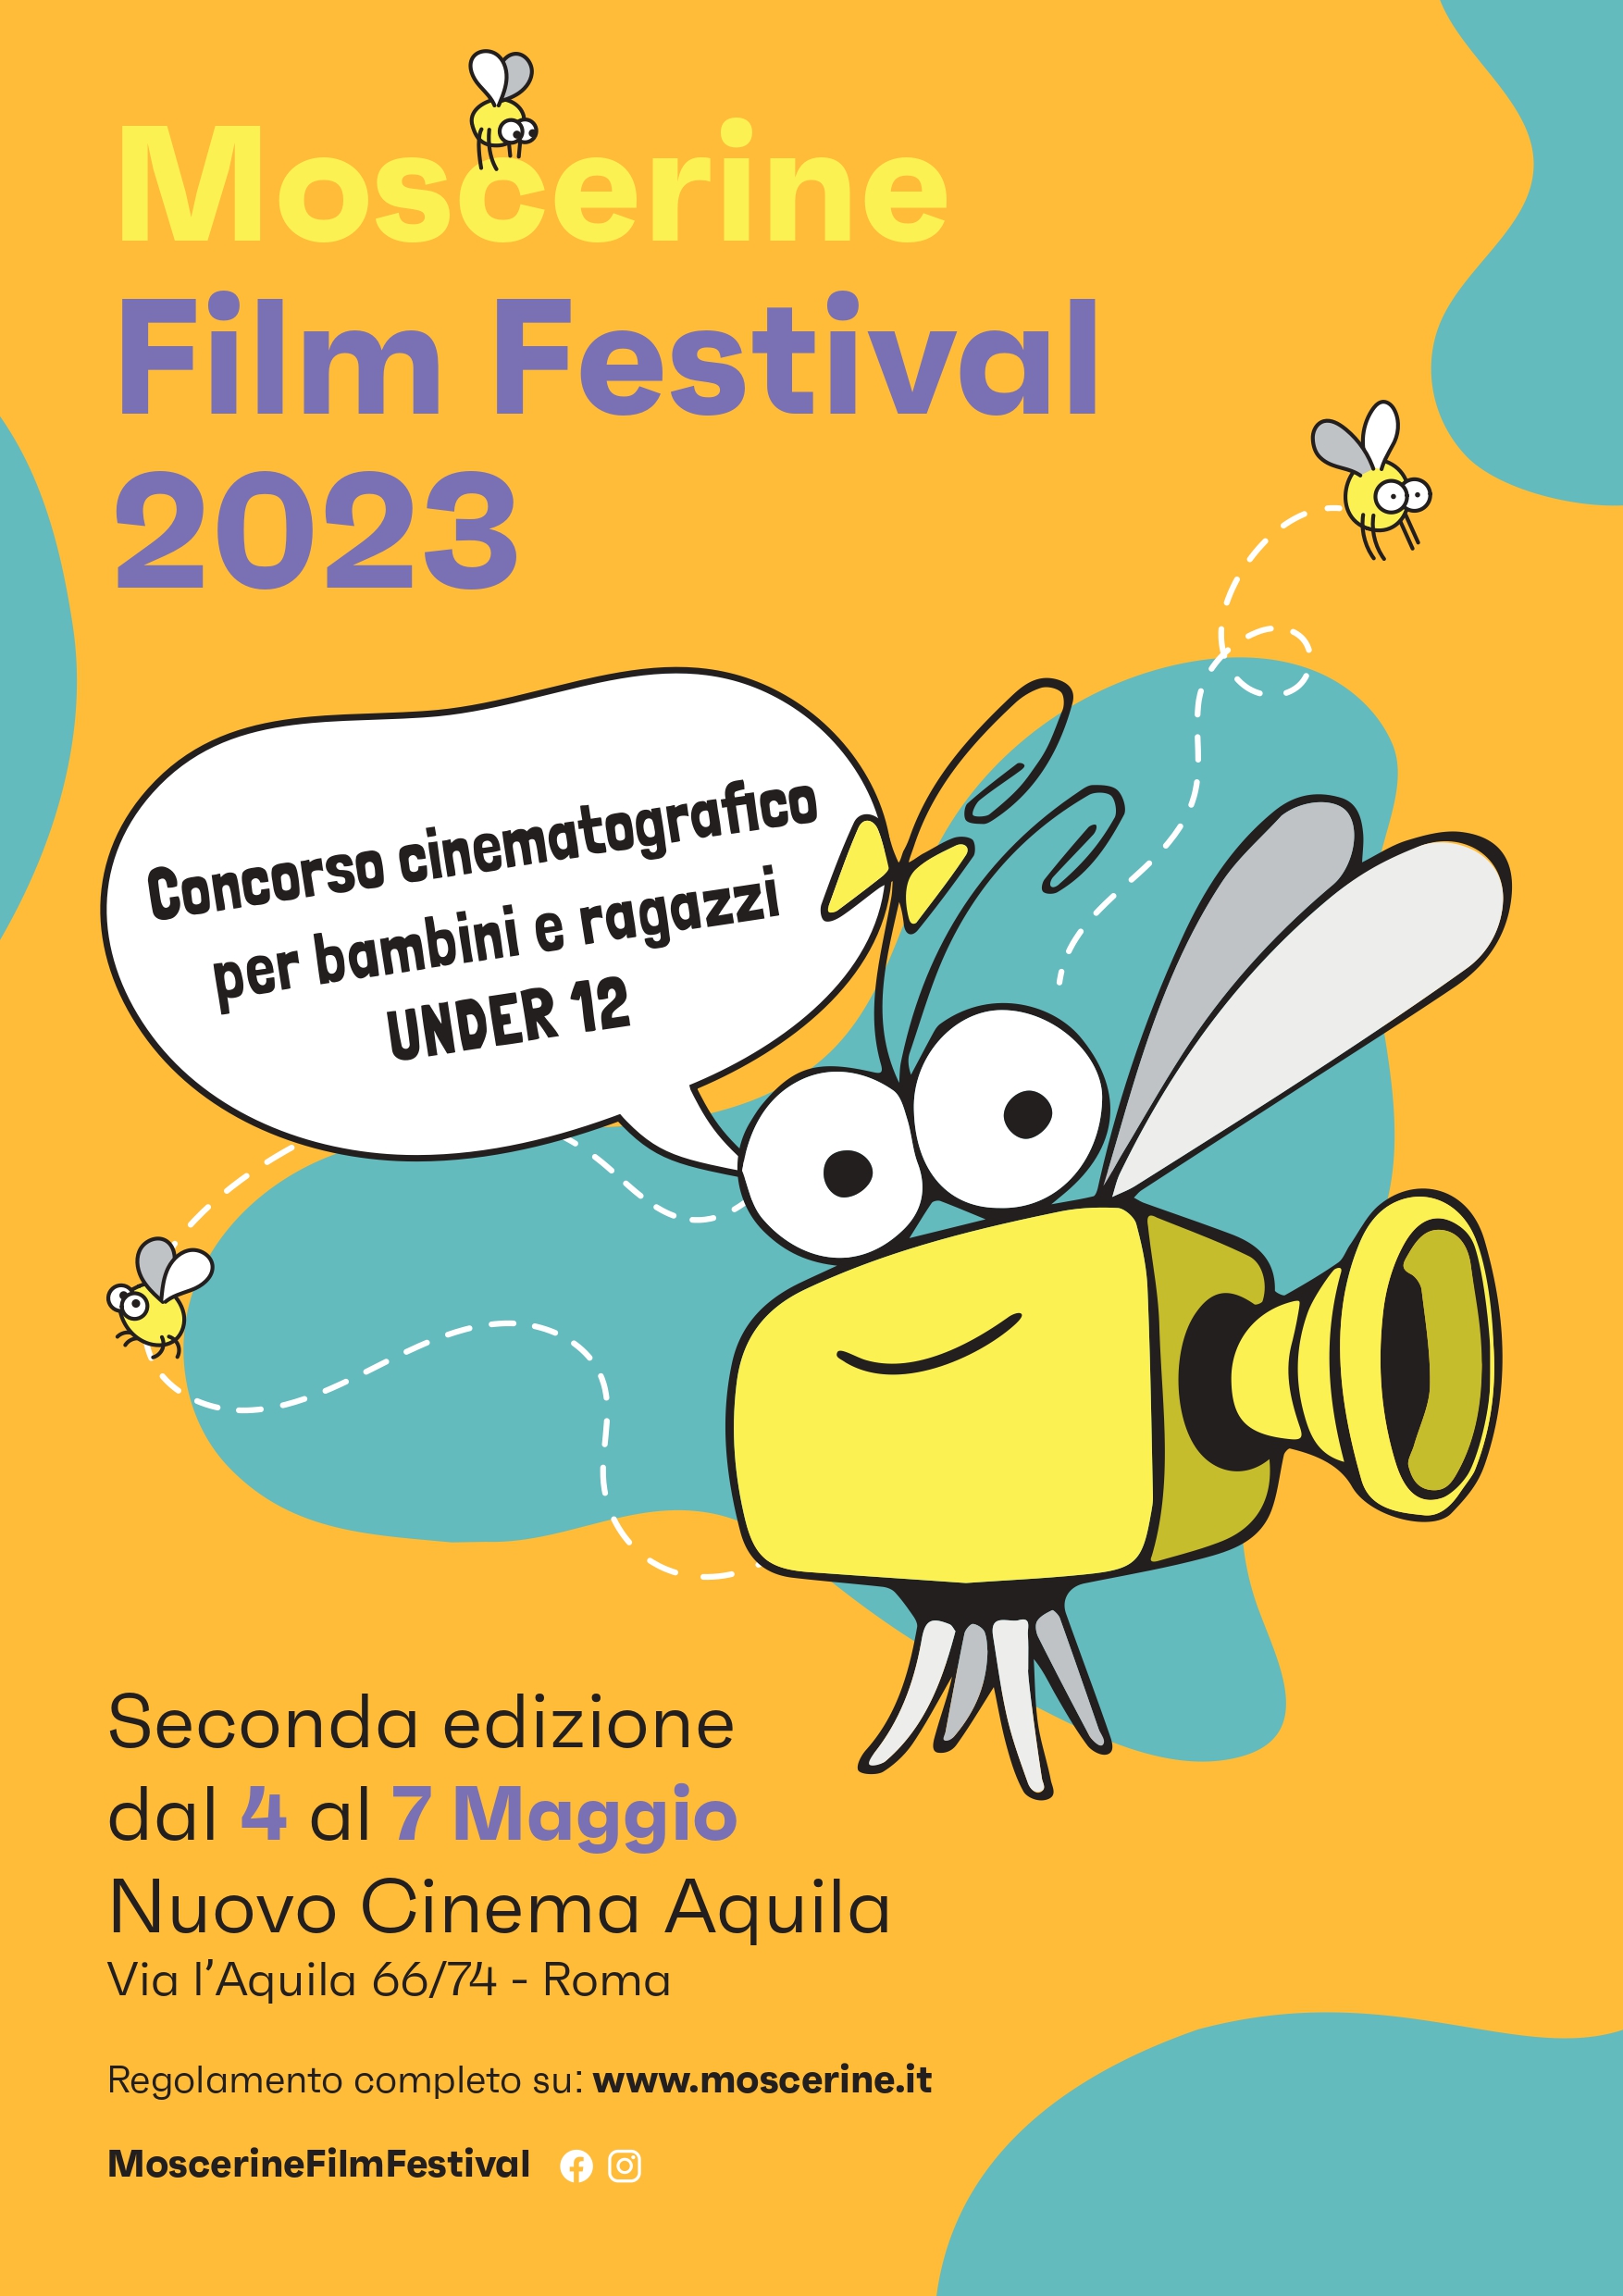 Moscerine Film Festival 2023